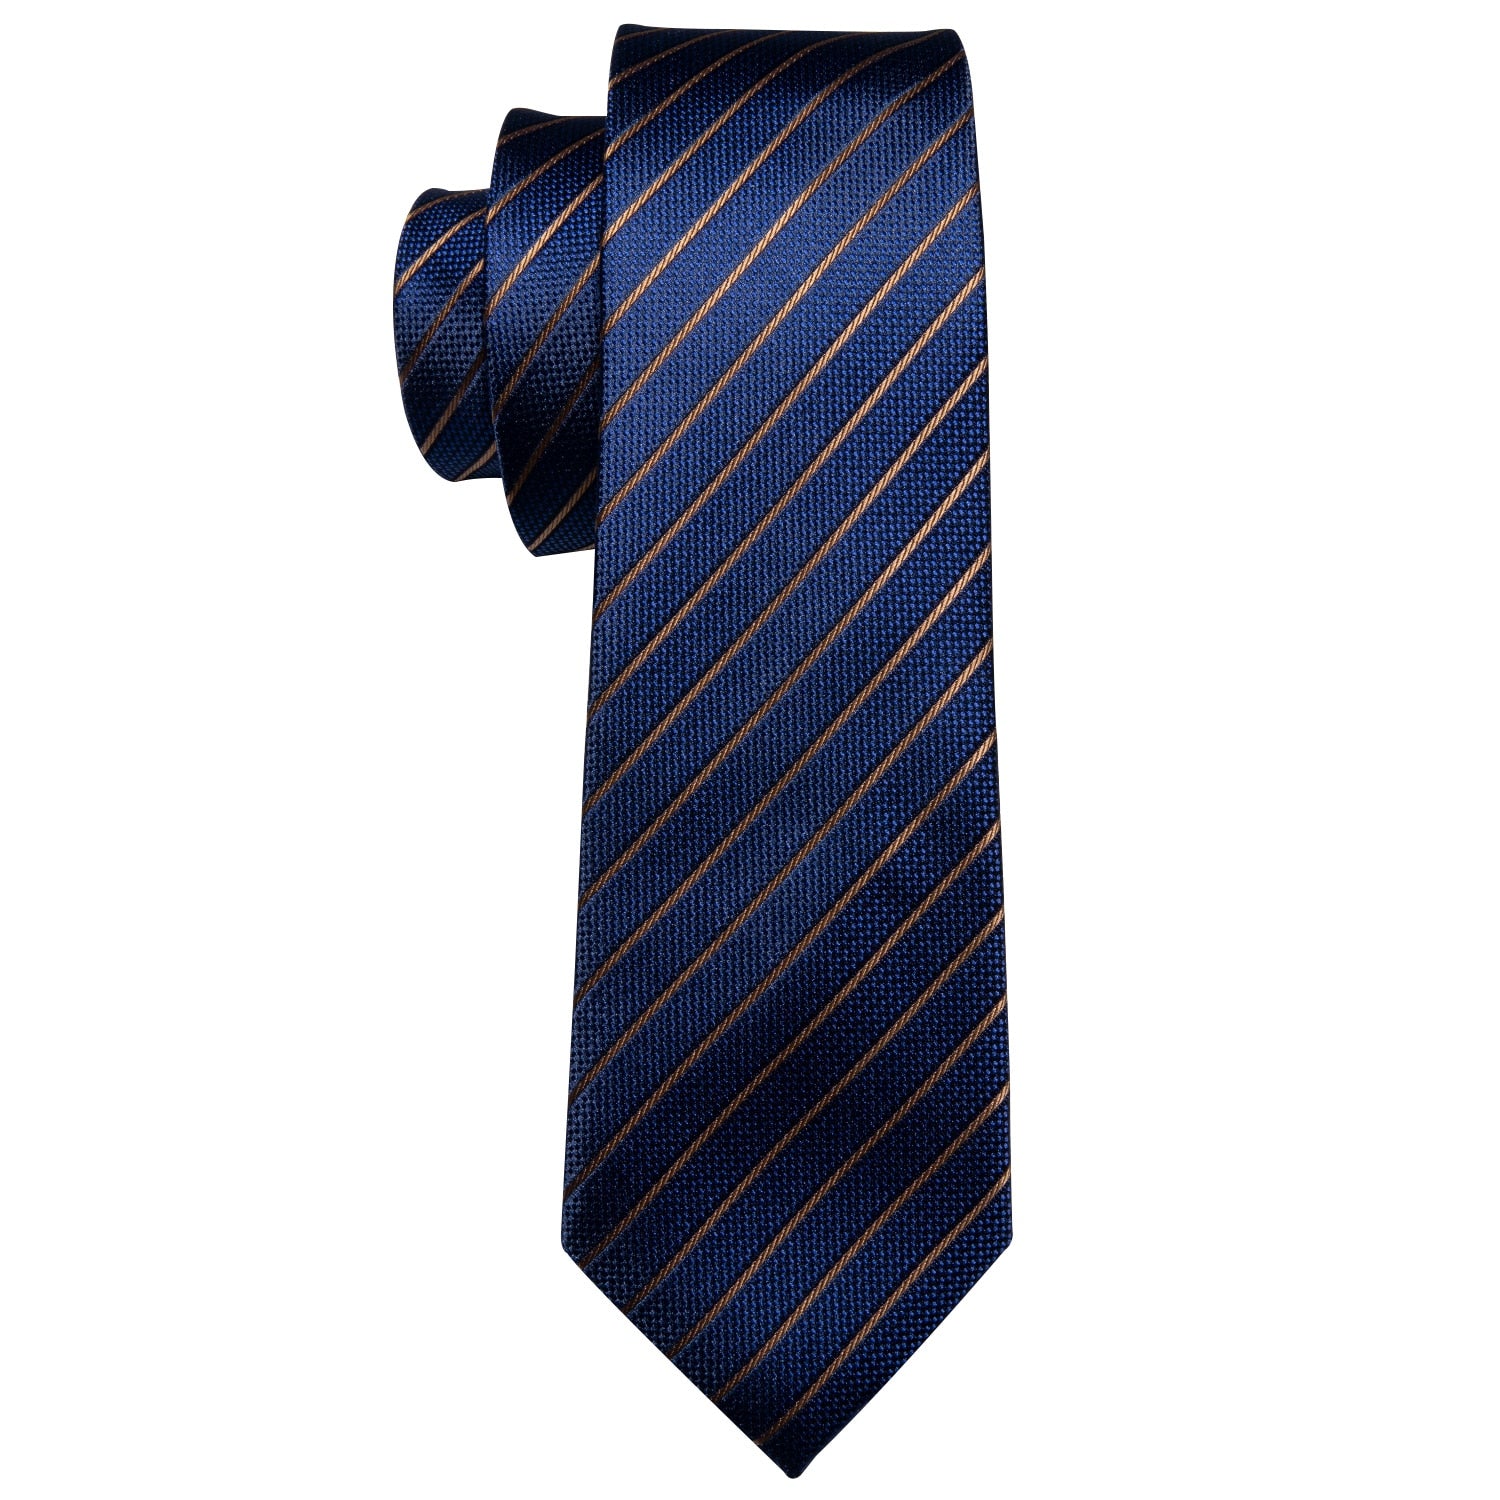 Midnight blue and black regimental motif silk tie set